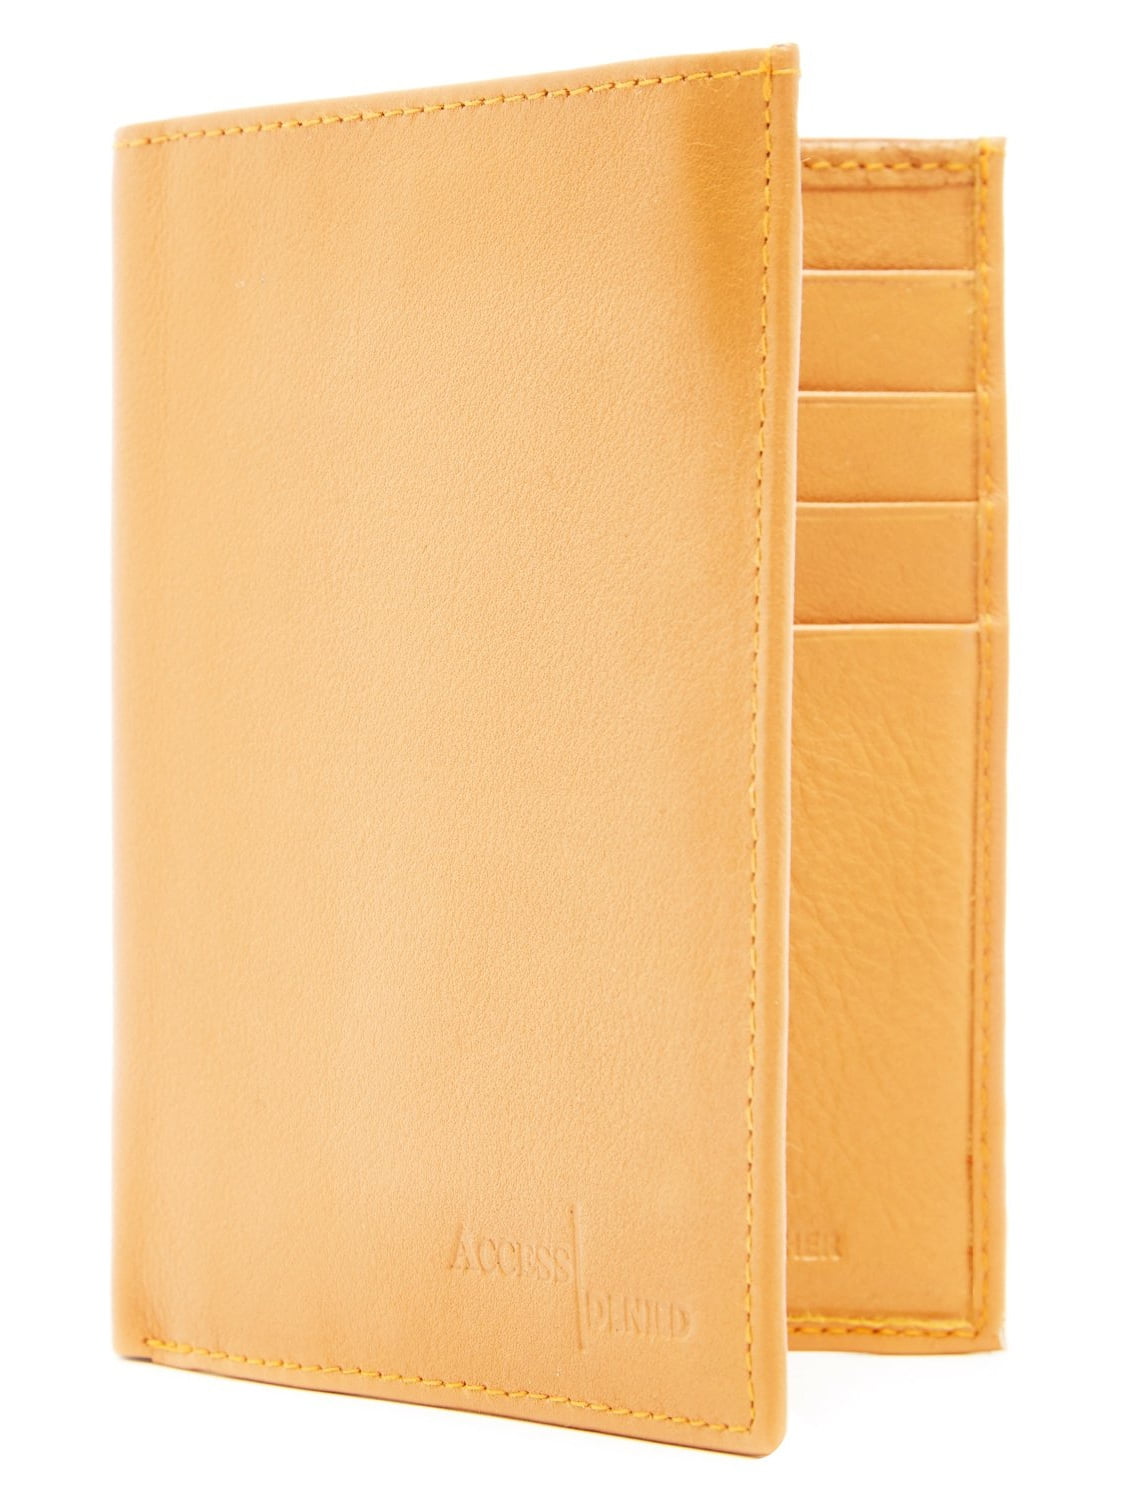 Unicorn Colorful Genuine Leather Passport Holder Wallet Case Cover for Men Women